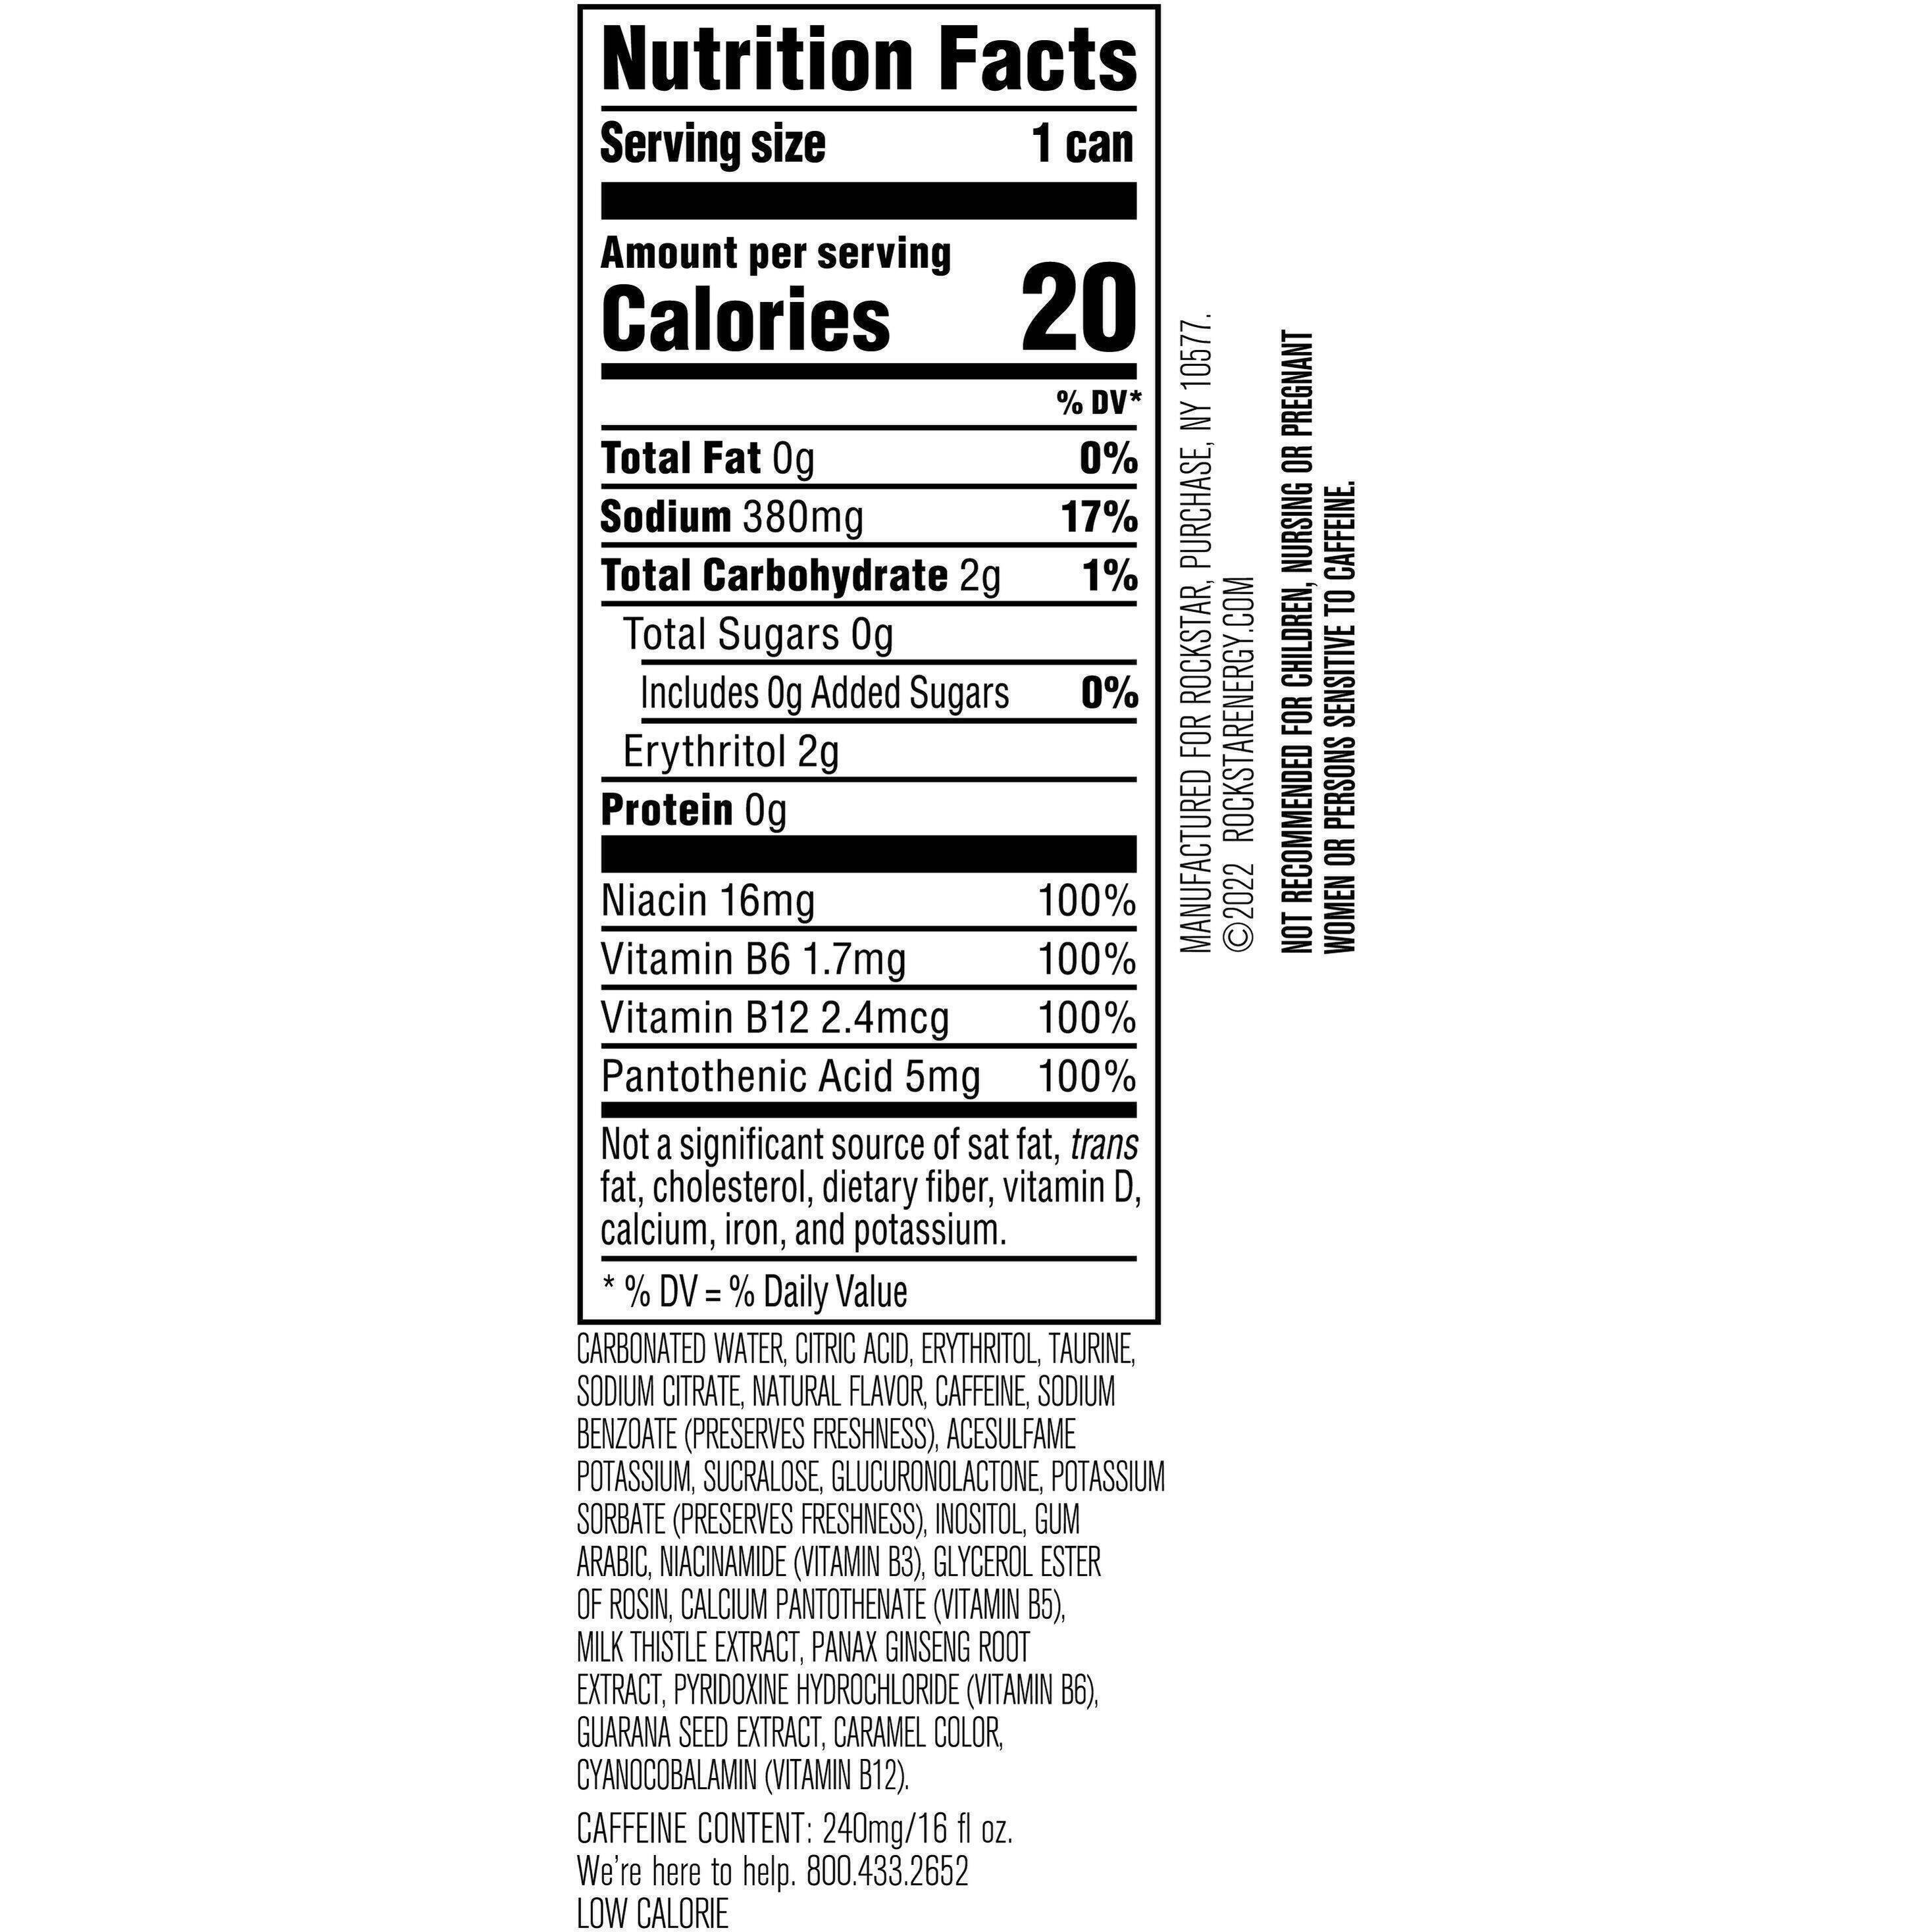 Image describing nutrition information for product Rockstar Pure Zero Silver Ice